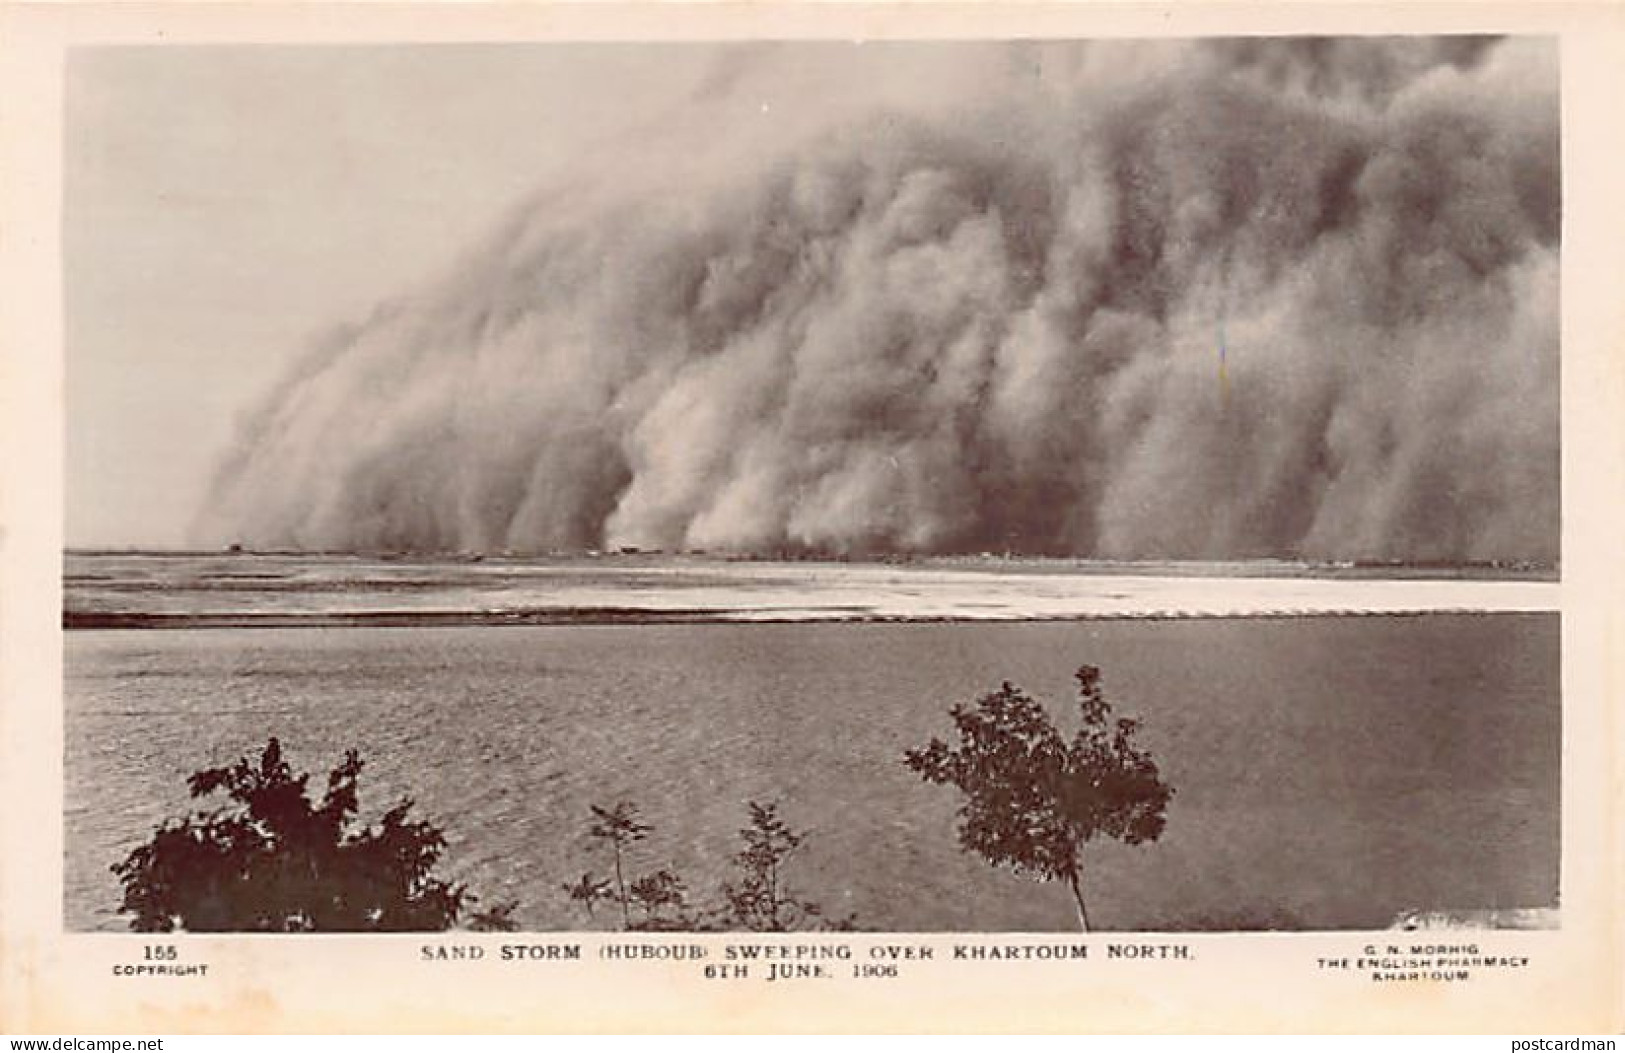 Sudan - Sand Storm Sweeping Over Khartoum North, 6th June 1906 - REAL PHOTO Publ. G. N. Mohring 155 - Sudan